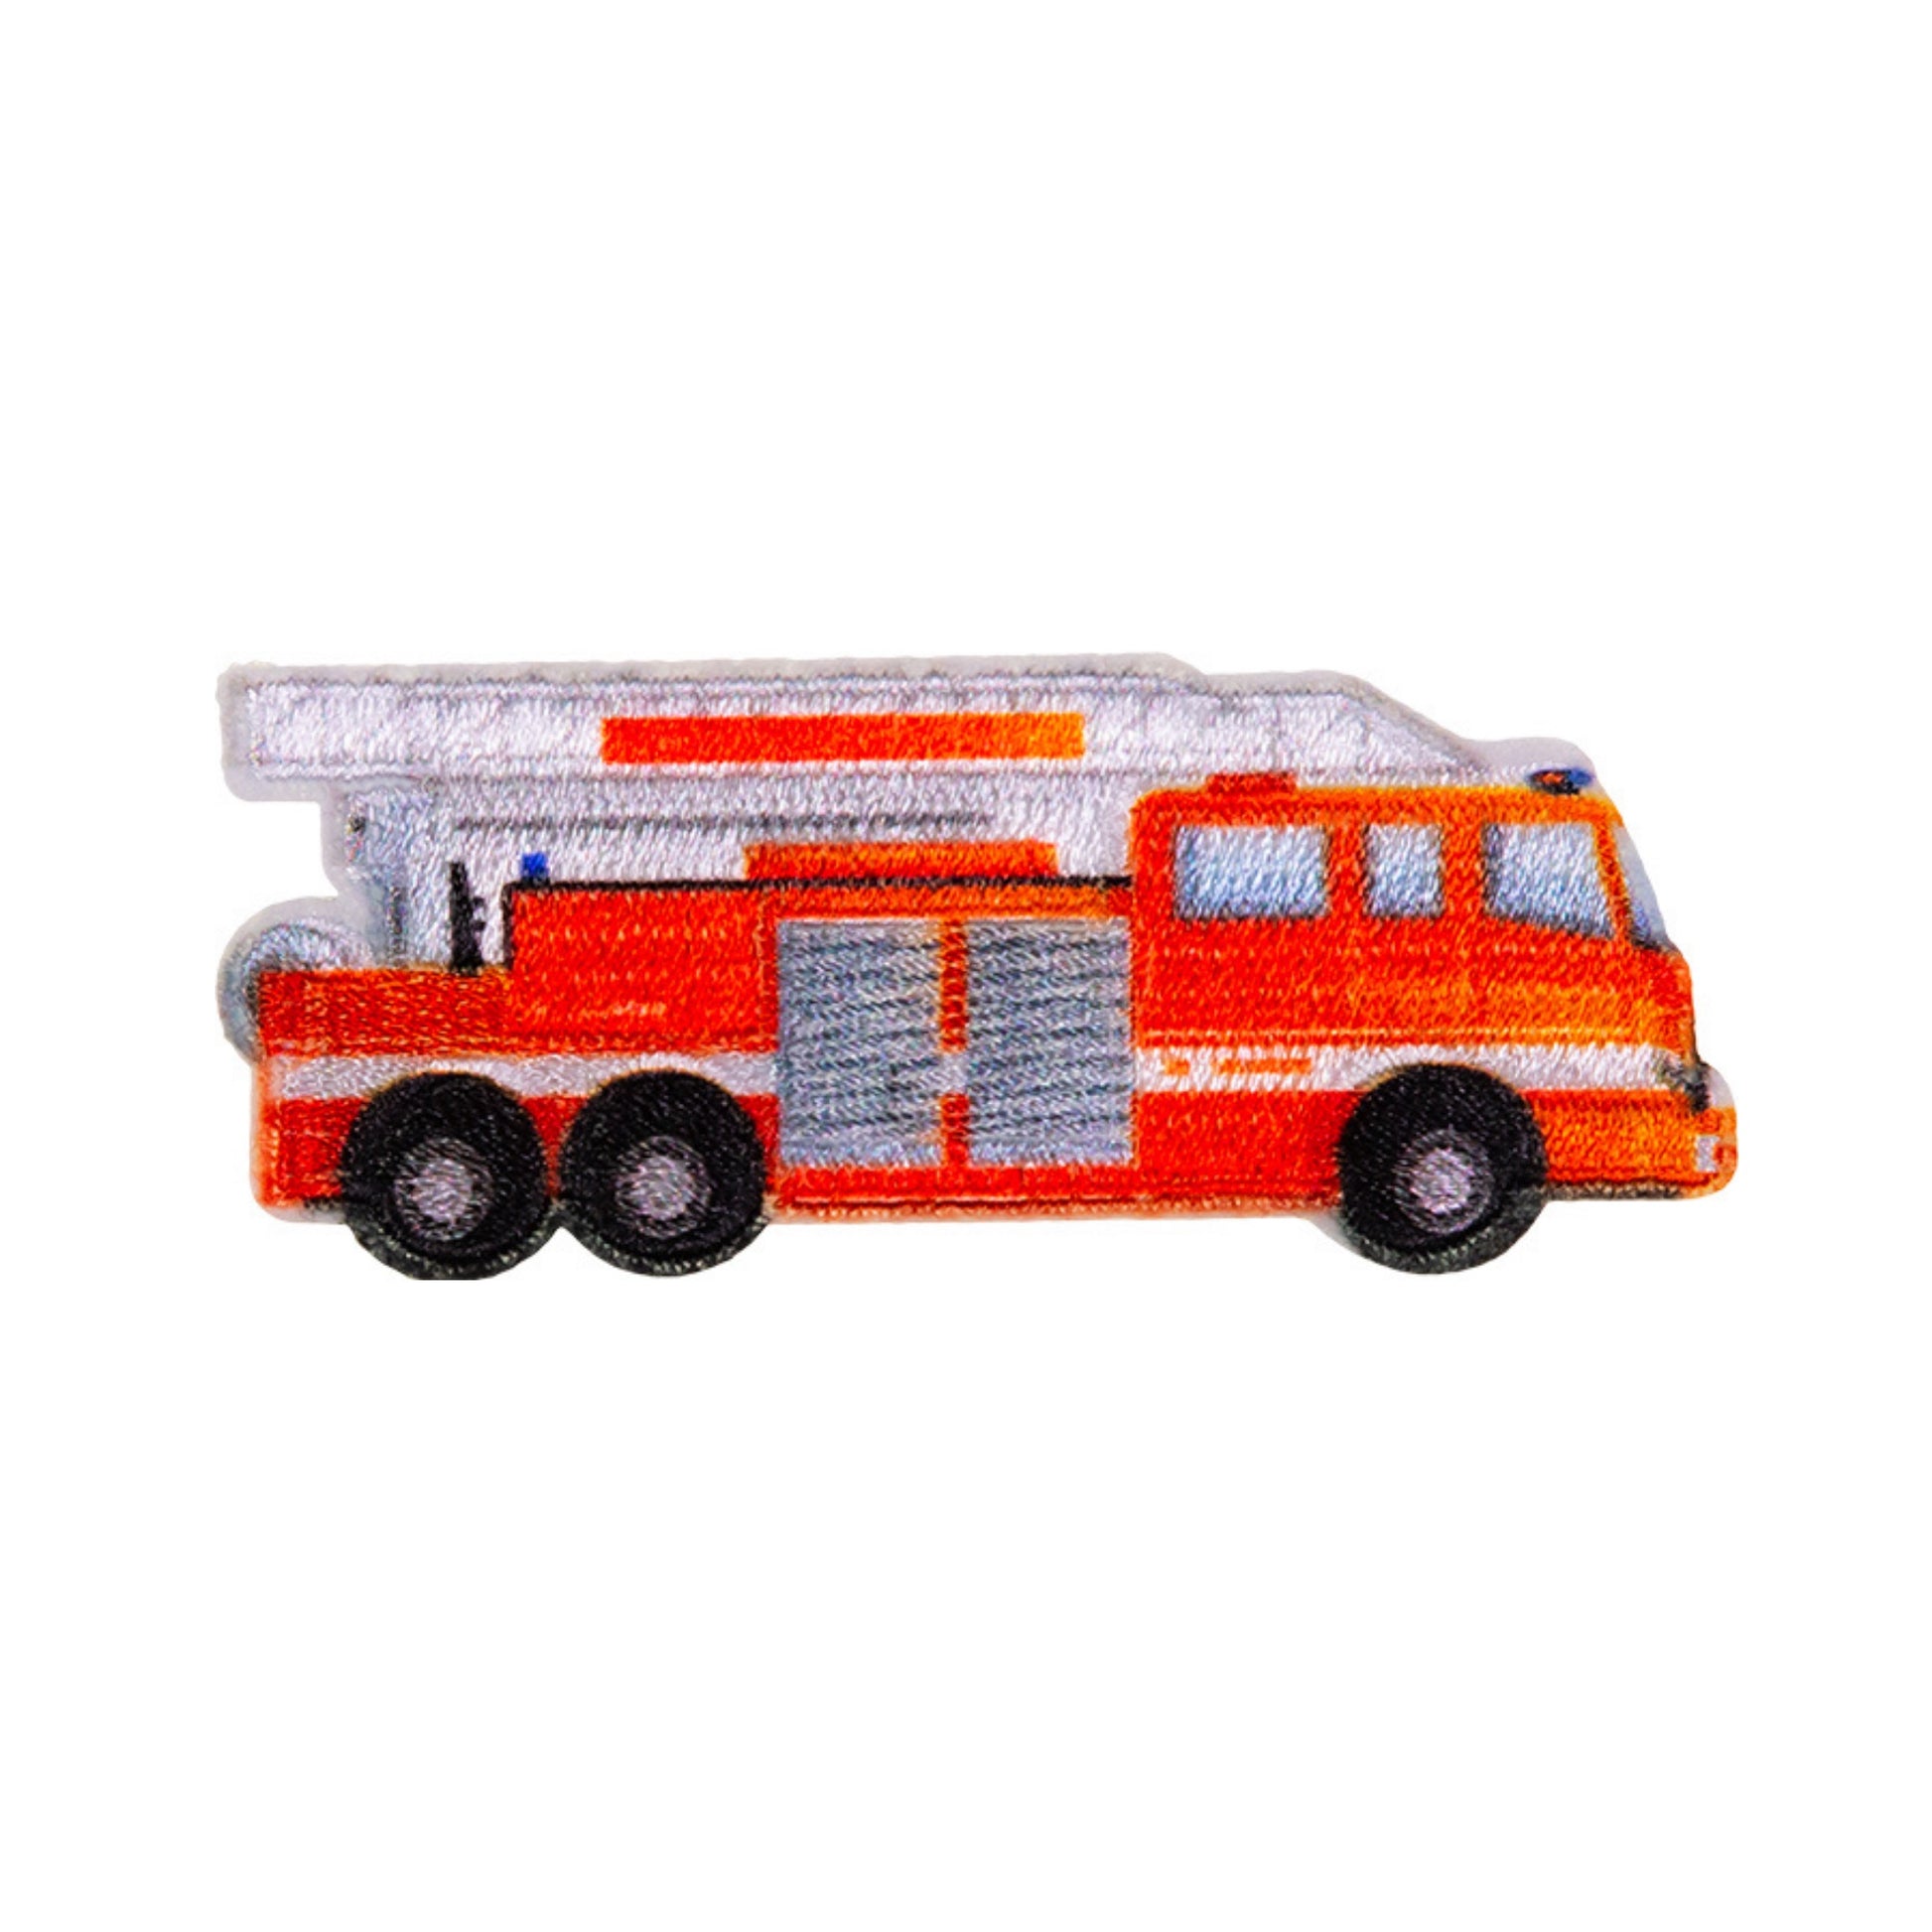 Applikation Bügelbild Feuerwehrauto